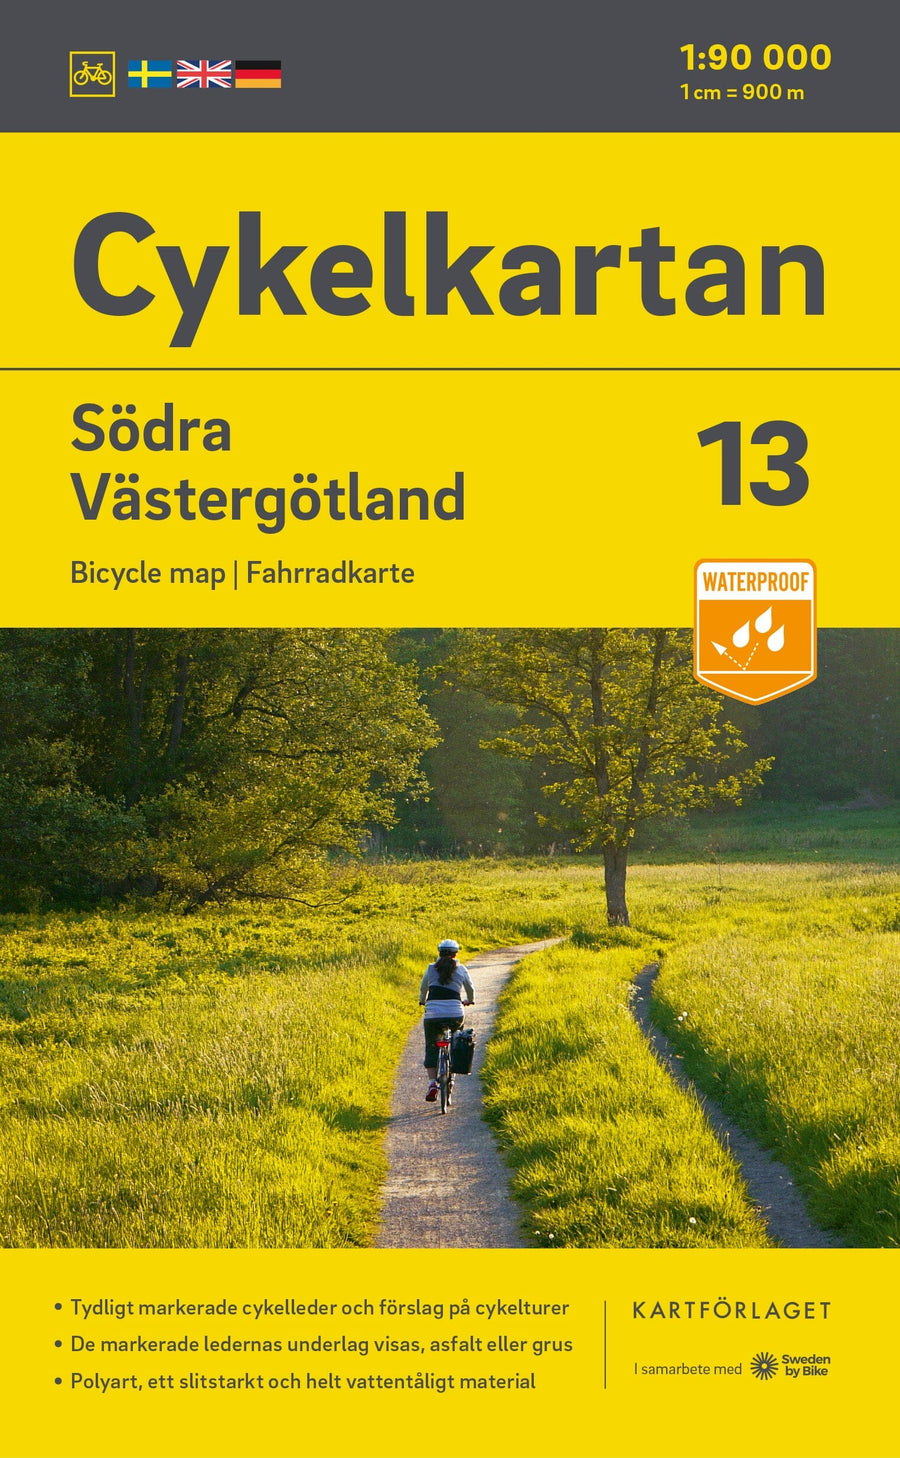 Carte cycliste n° 13 - Västergötland Sud (Suède) | Norstedts carte pliée Norstedts 